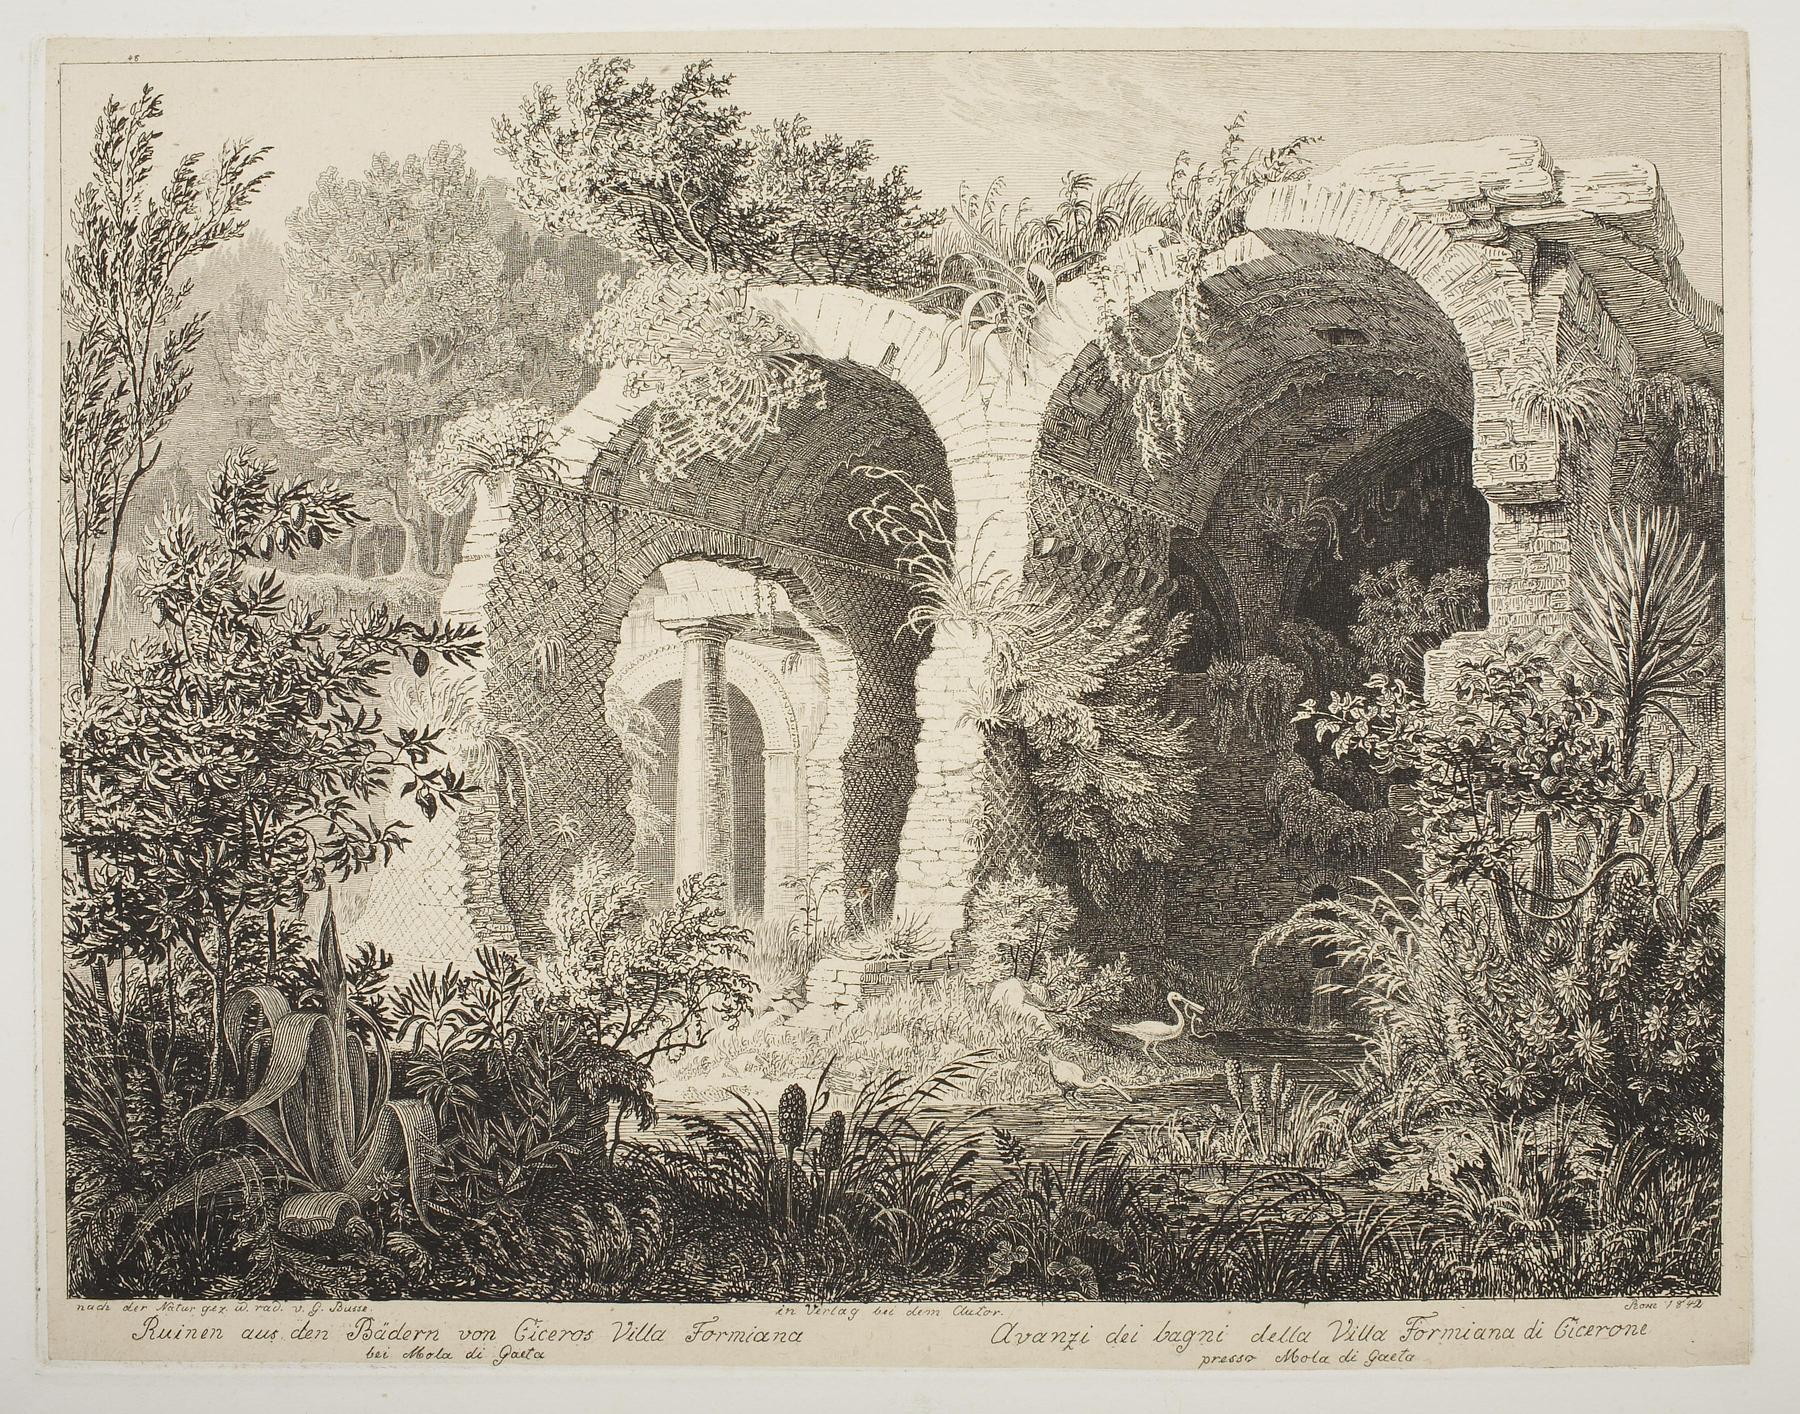 Ruiner af badene i Ciceros Villa Formiana, E396